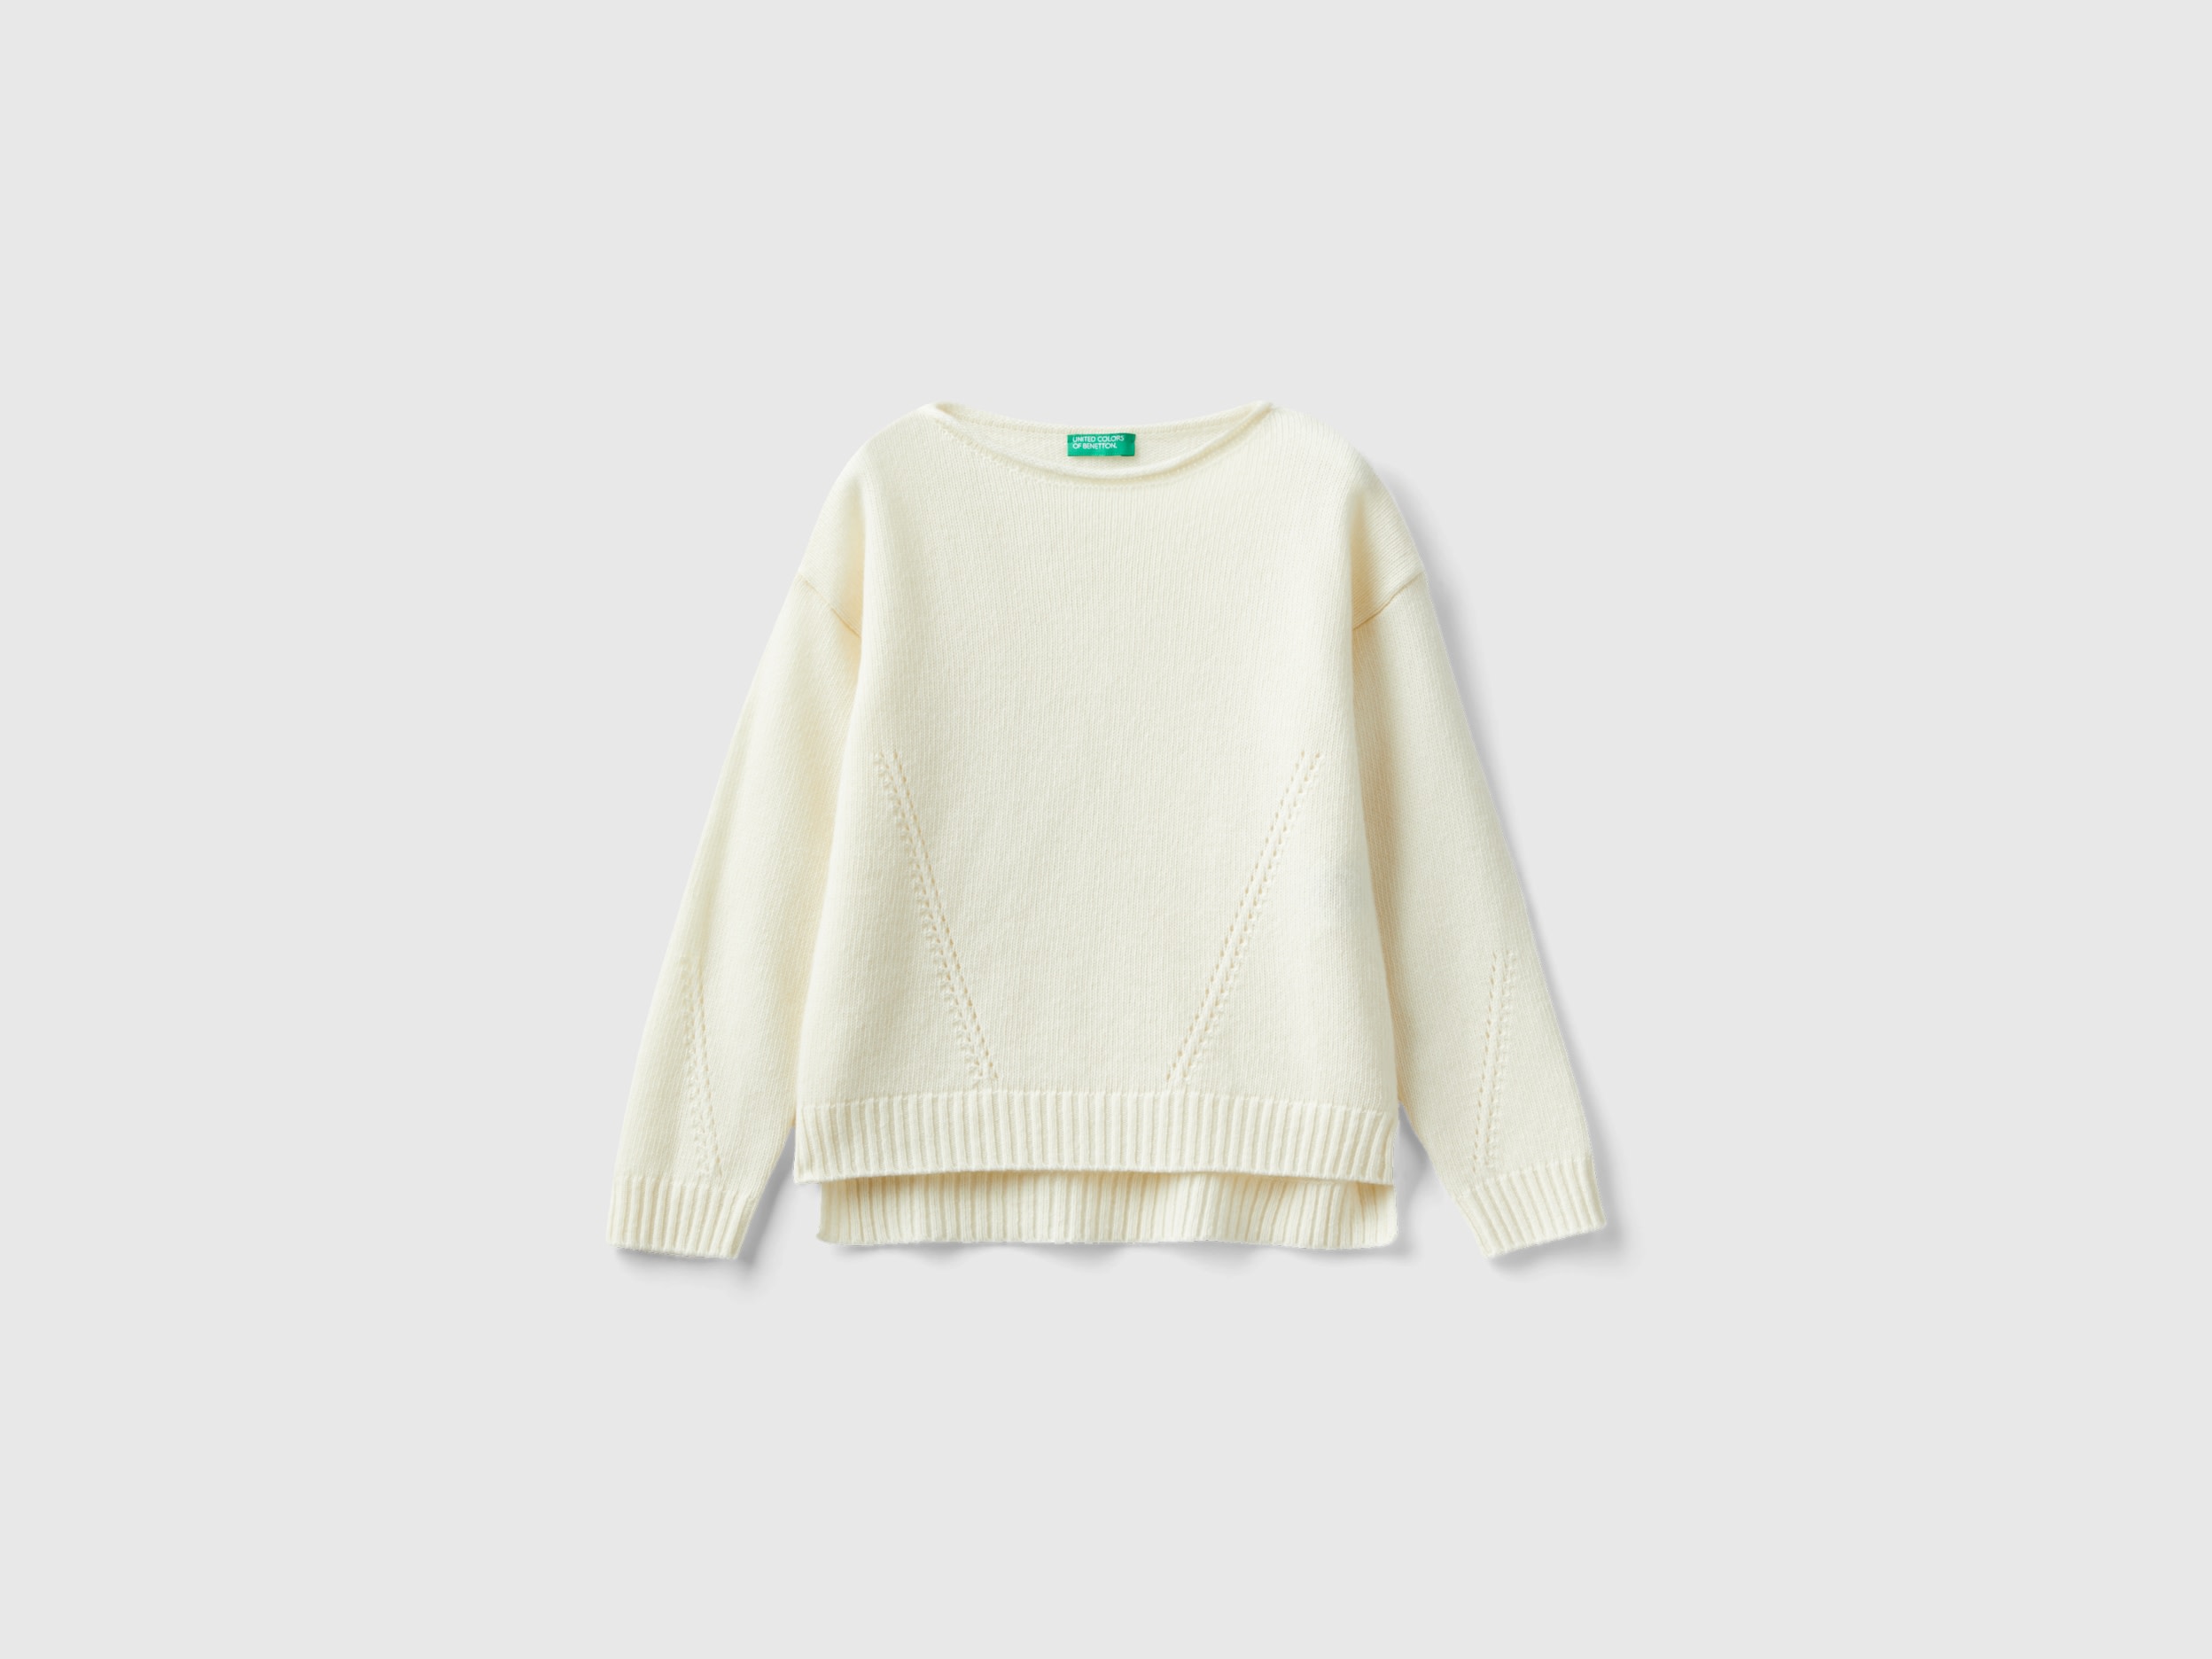 Benetton, Knit Sweater With Playful Stitching, size S, Creamy White, Kids